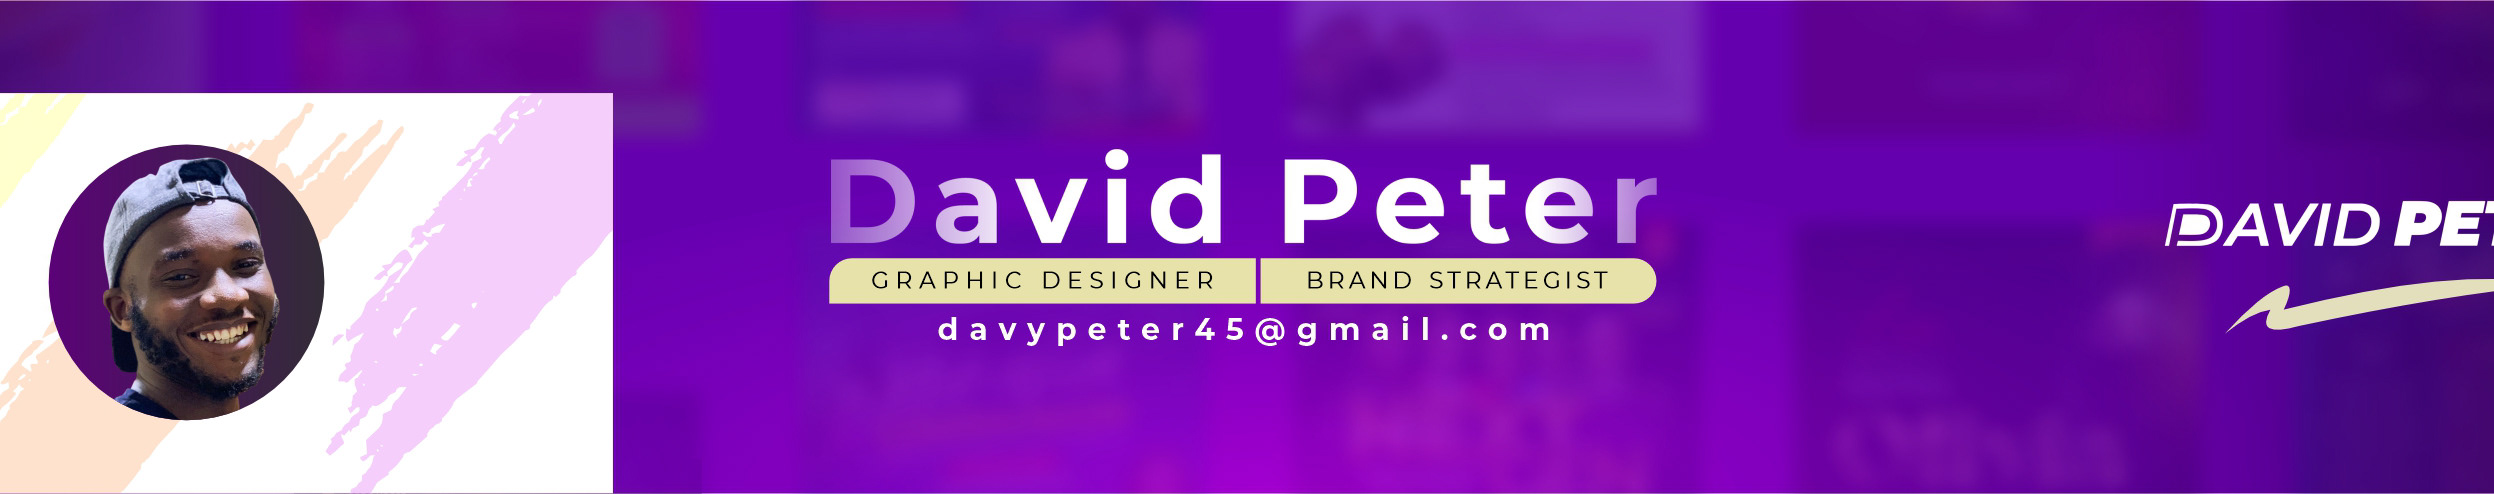 Banner profilu uživatele David Peter